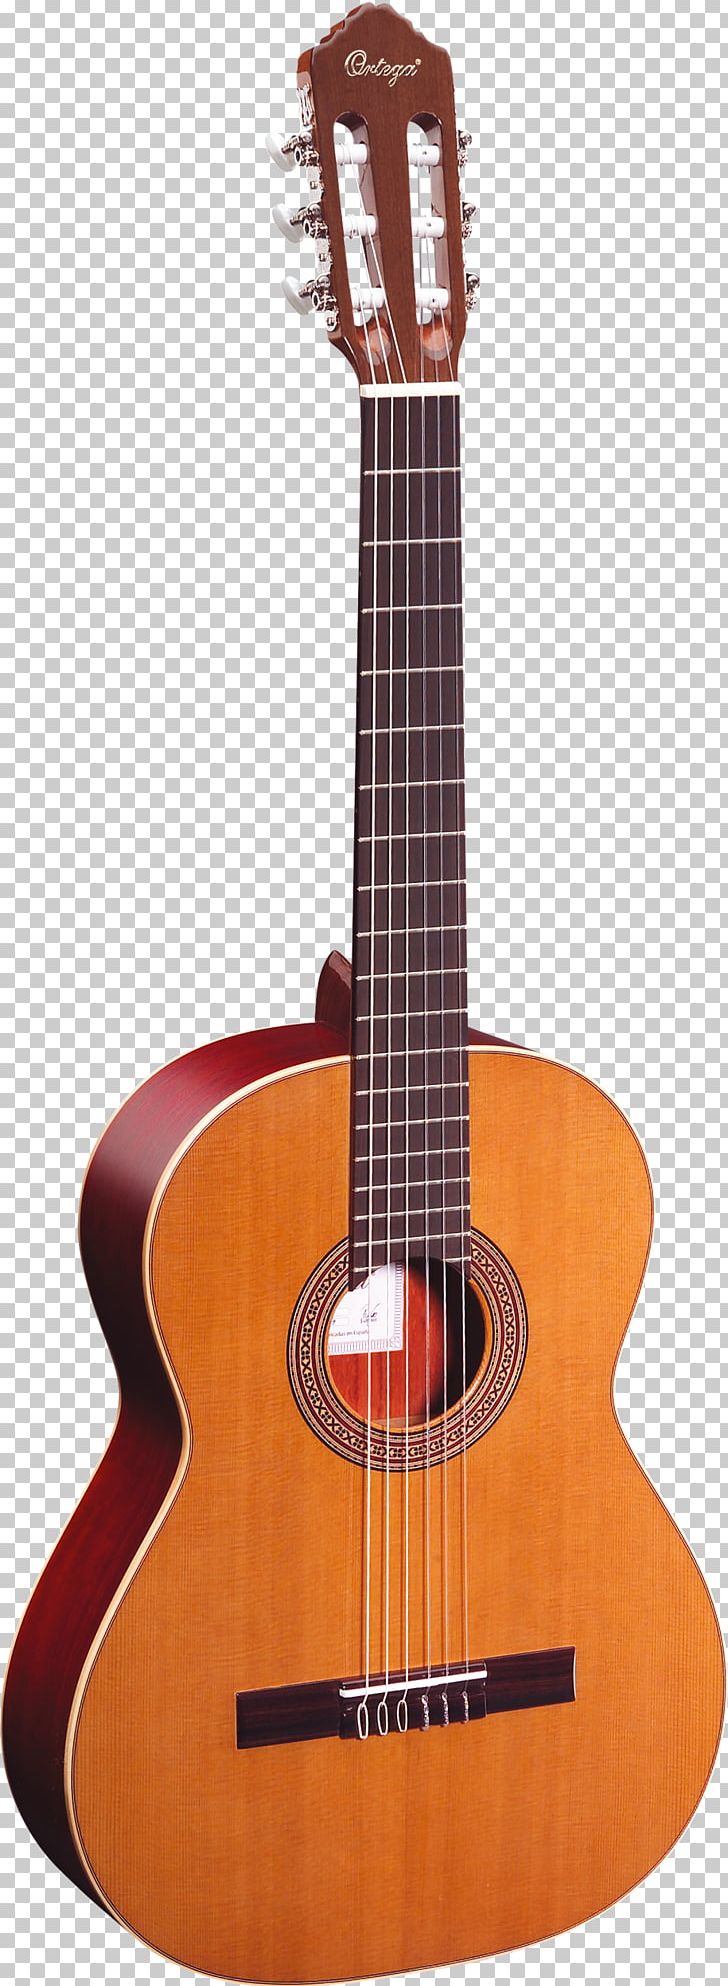 Acoustic-electric Guitar Classical Guitar Steel-string Acoustic Guitar PNG, Clipart, Acoustic Electric Guitar, Amancio Ortega, Classical Guitar, Cuatro, Cutaway Free PNG Download